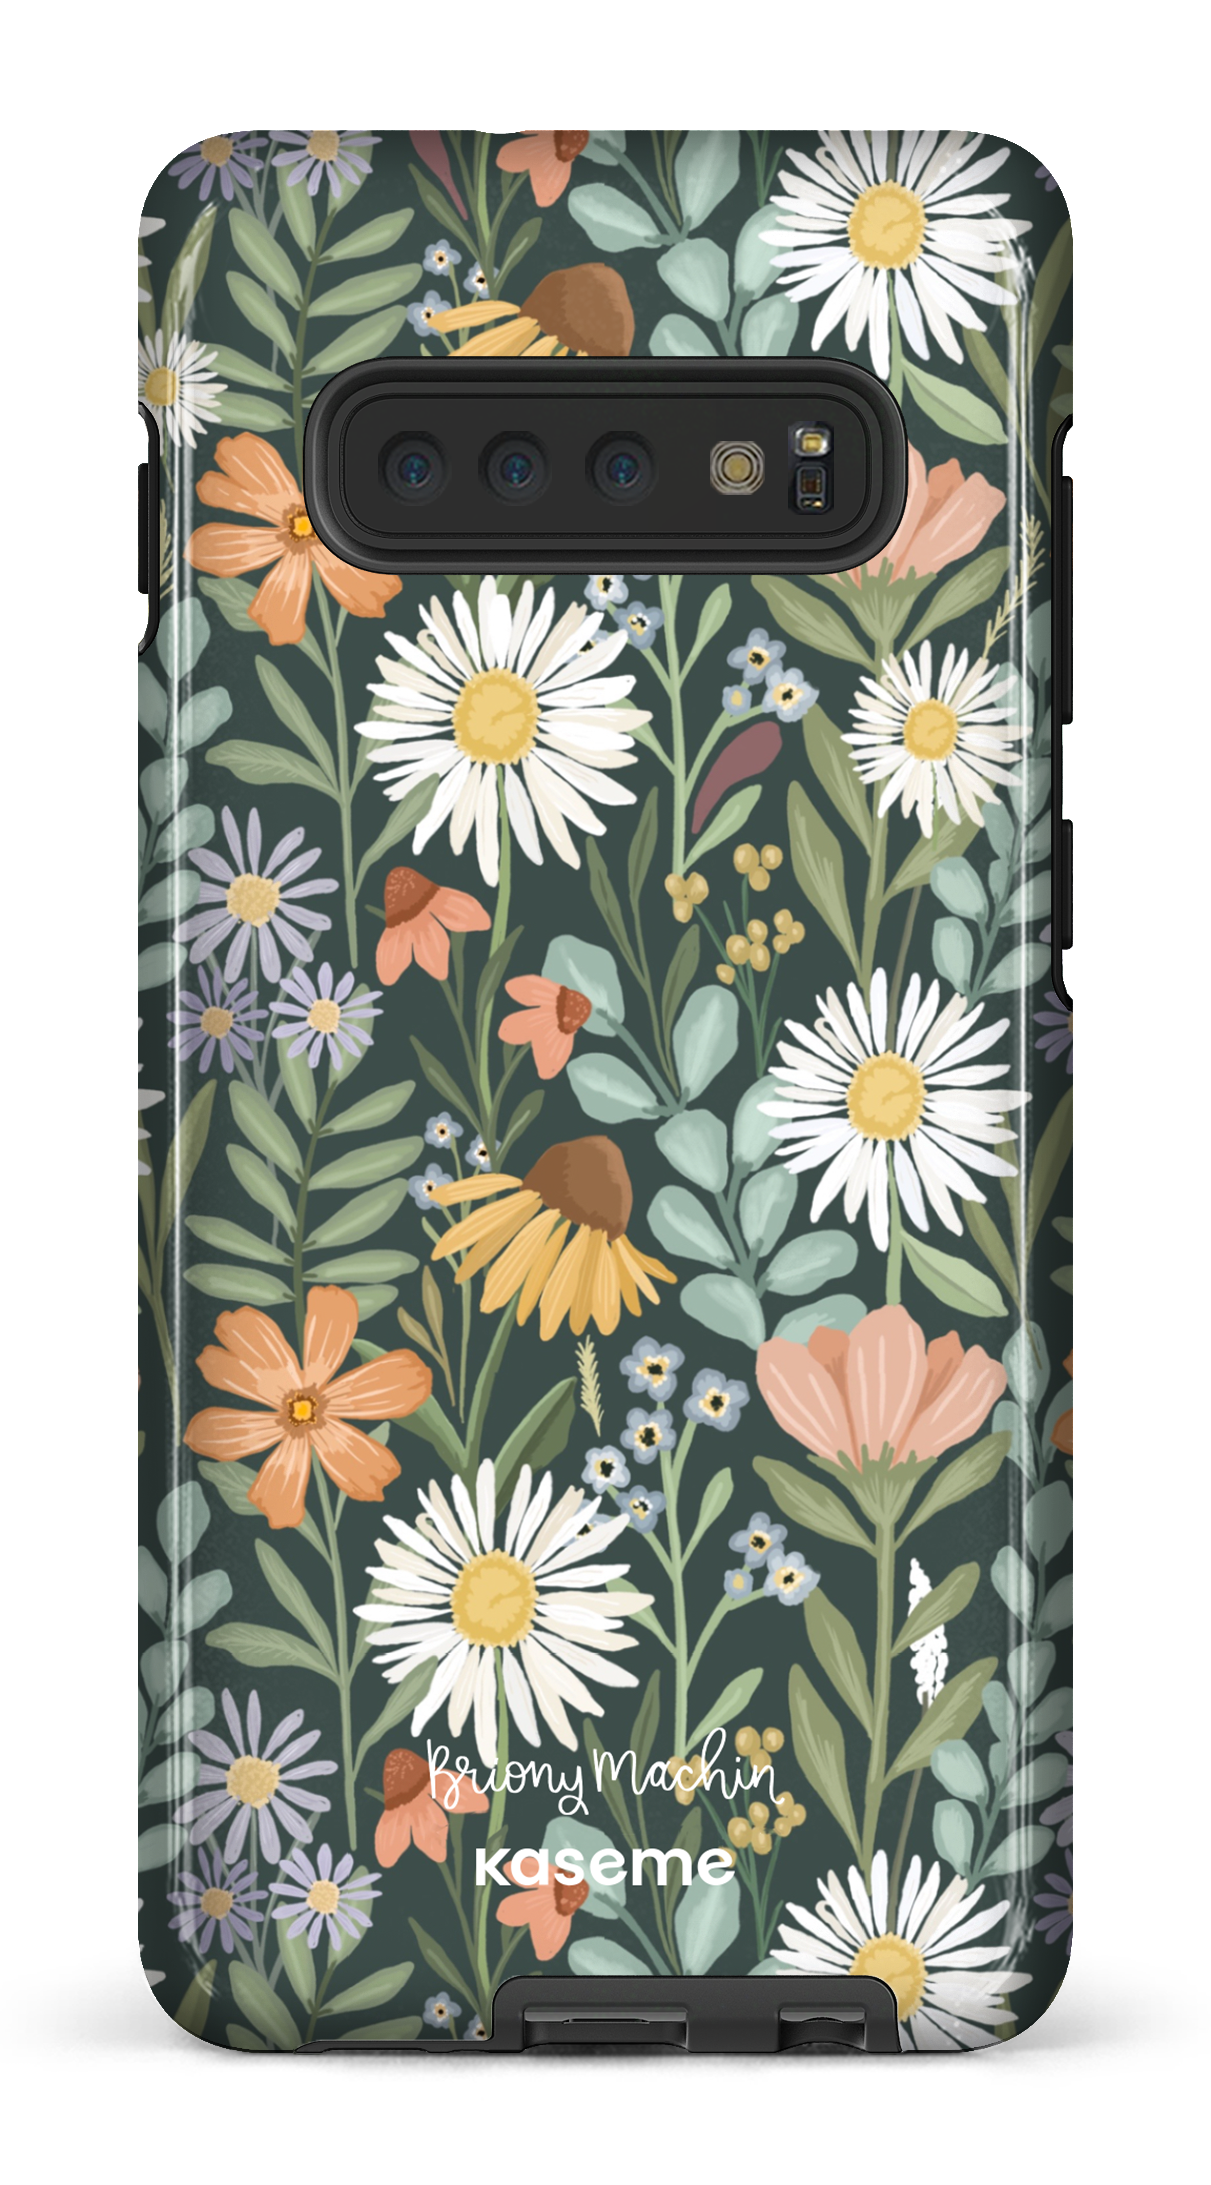 Sending Flowers Green by Briony Machin - Galaxy S10 Plus